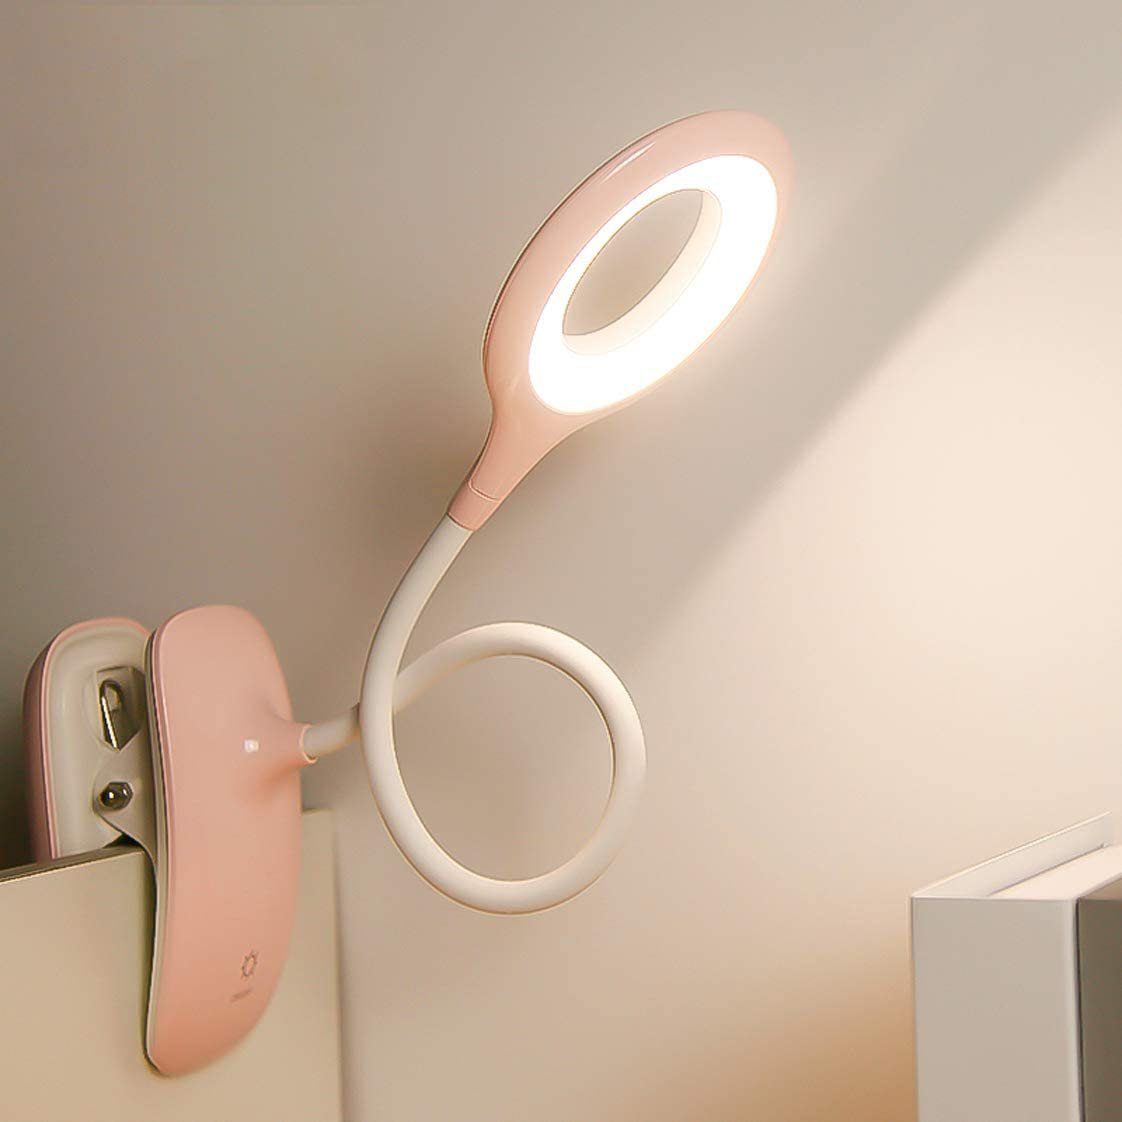 Jormftte LED Leselampe Klemmleuchte Schreibtischlampe,Buchlampe